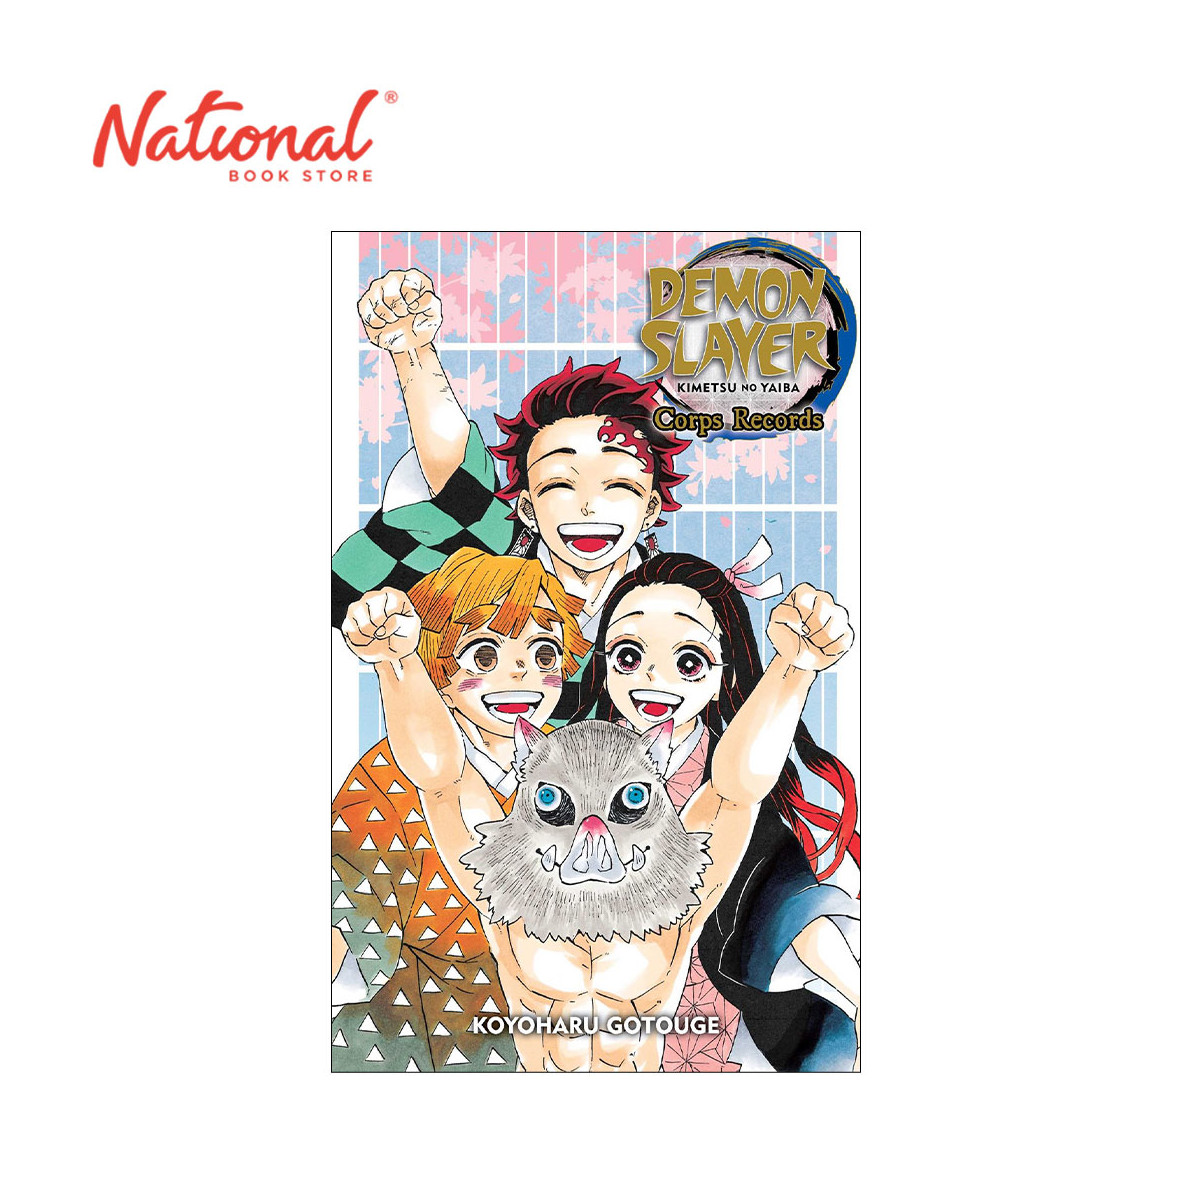 https://www.nationalbookstore.com/135421-thickbox_default/demon-slayer-kimetsu-no-yaiba-corps-records-by-koyoharu-gotouge-trade-paperback-manga.jpg